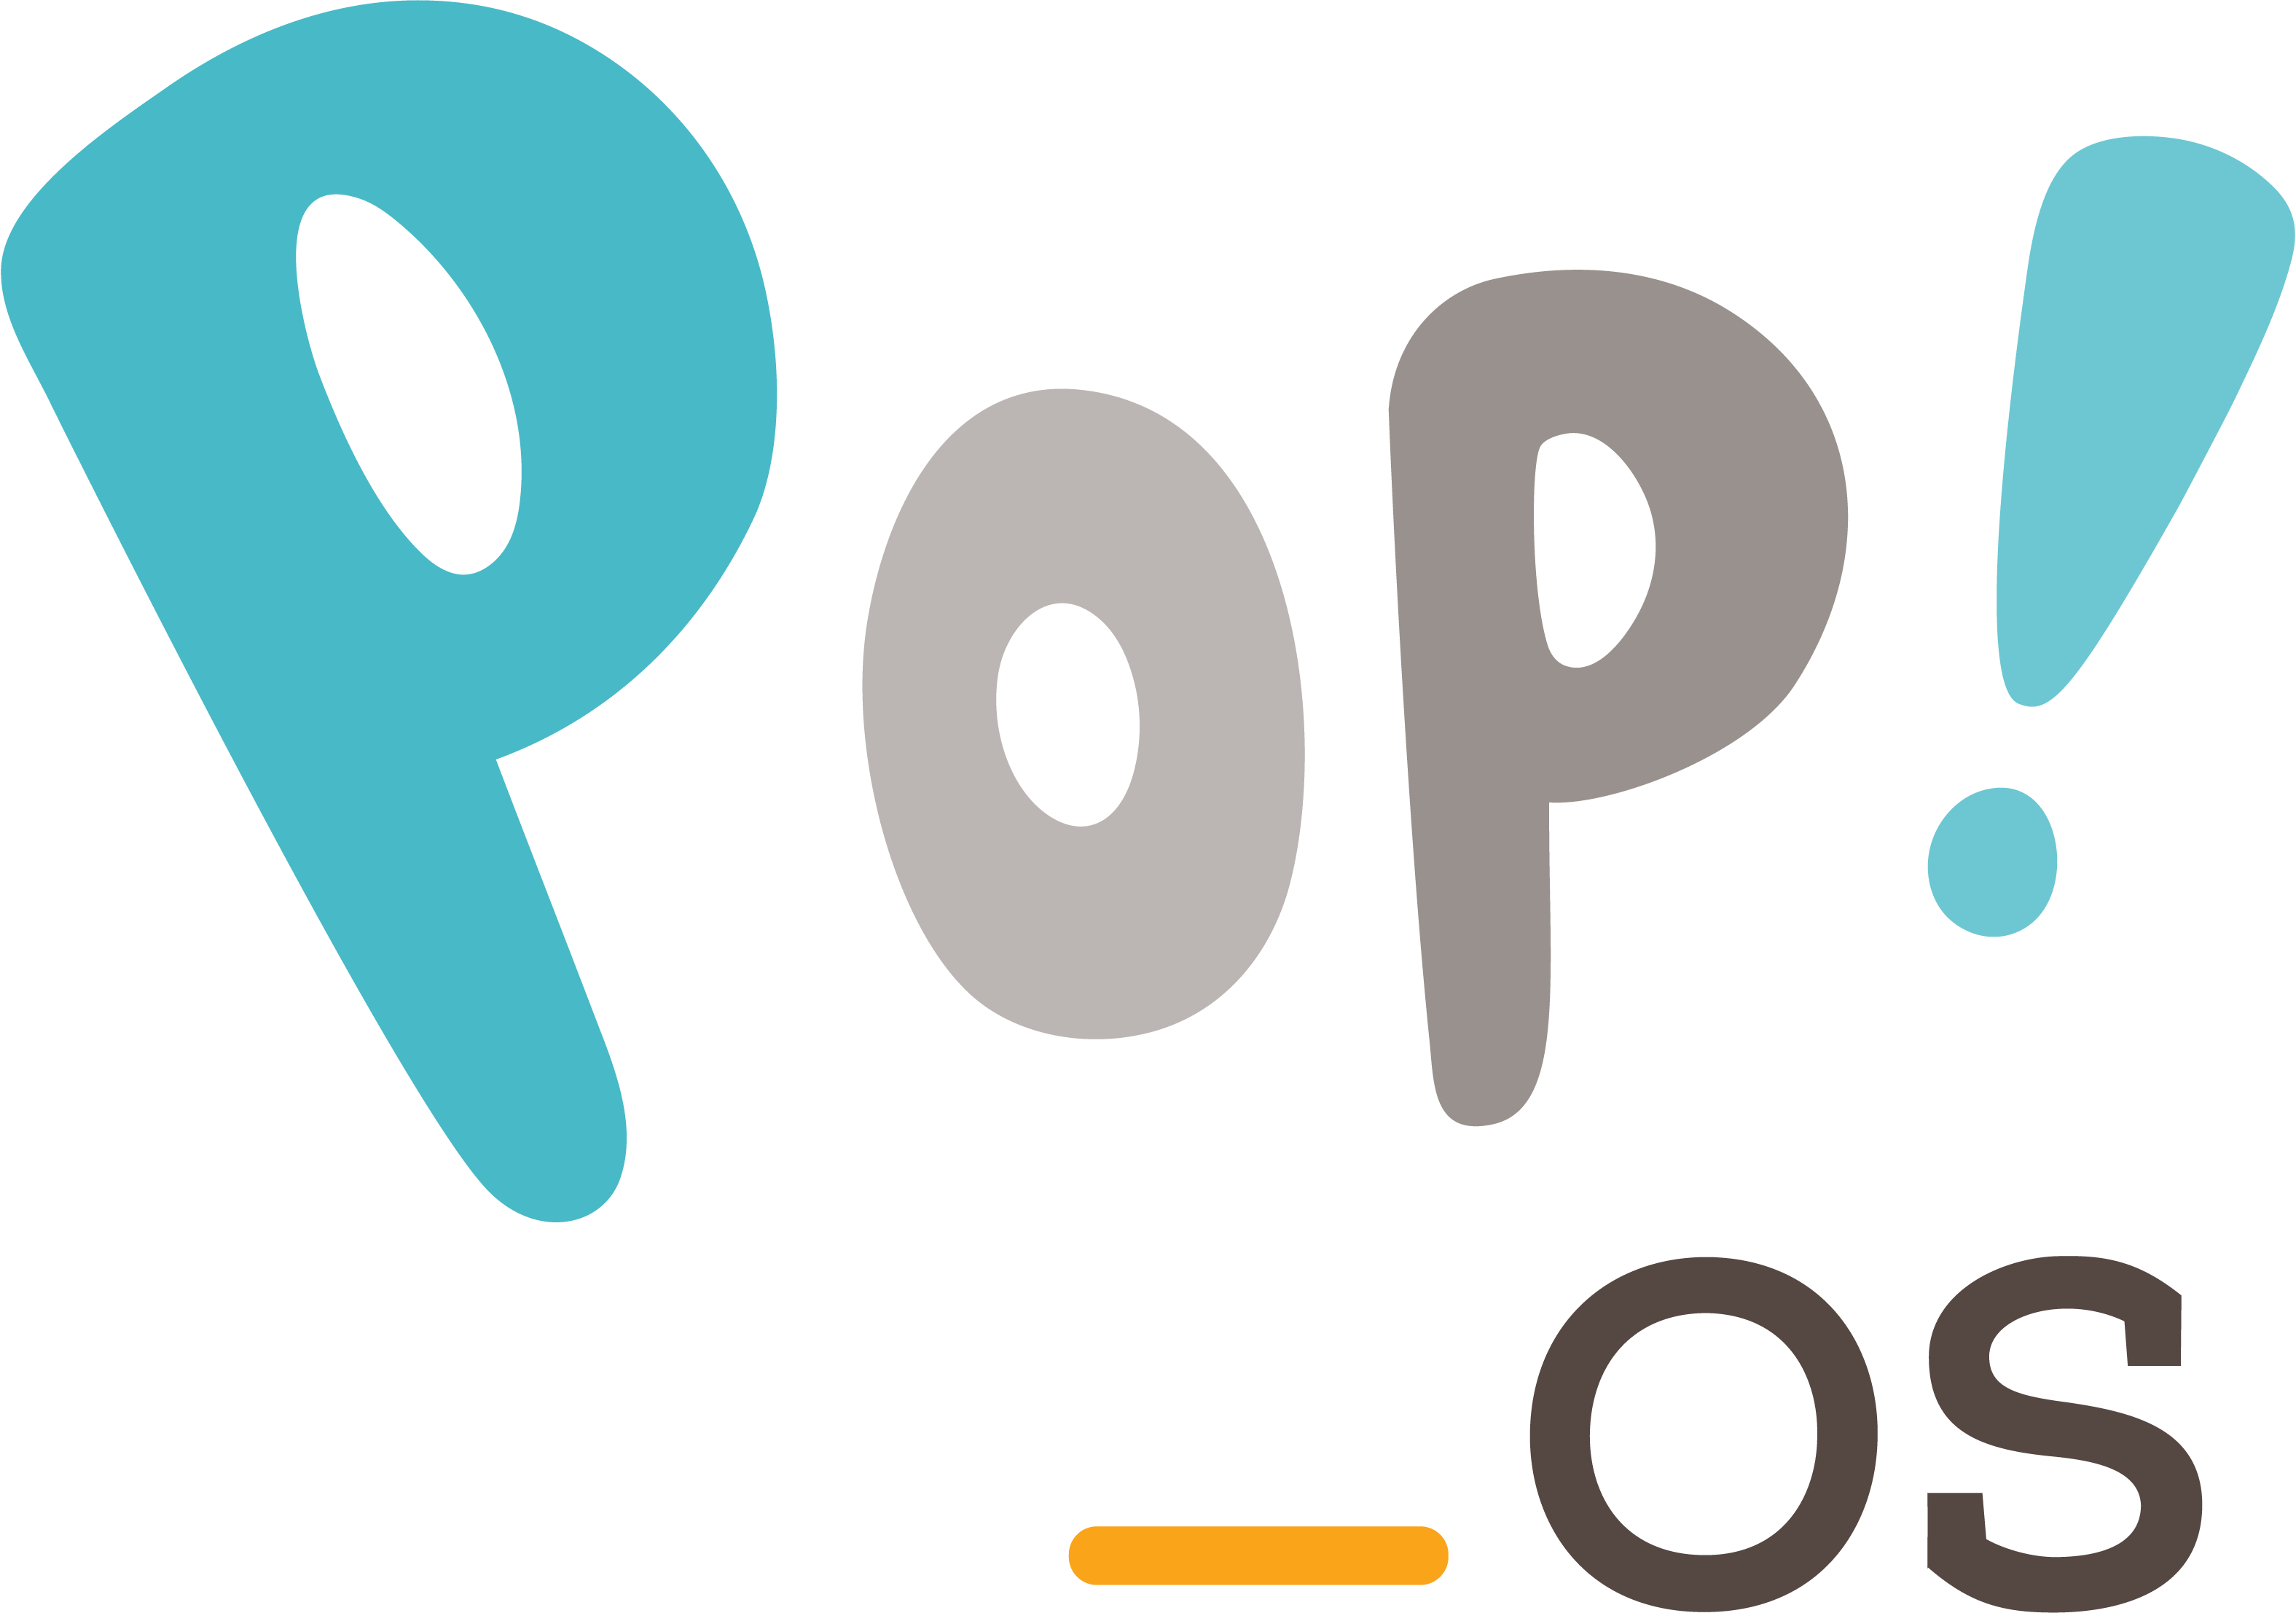 POP!_OS logo